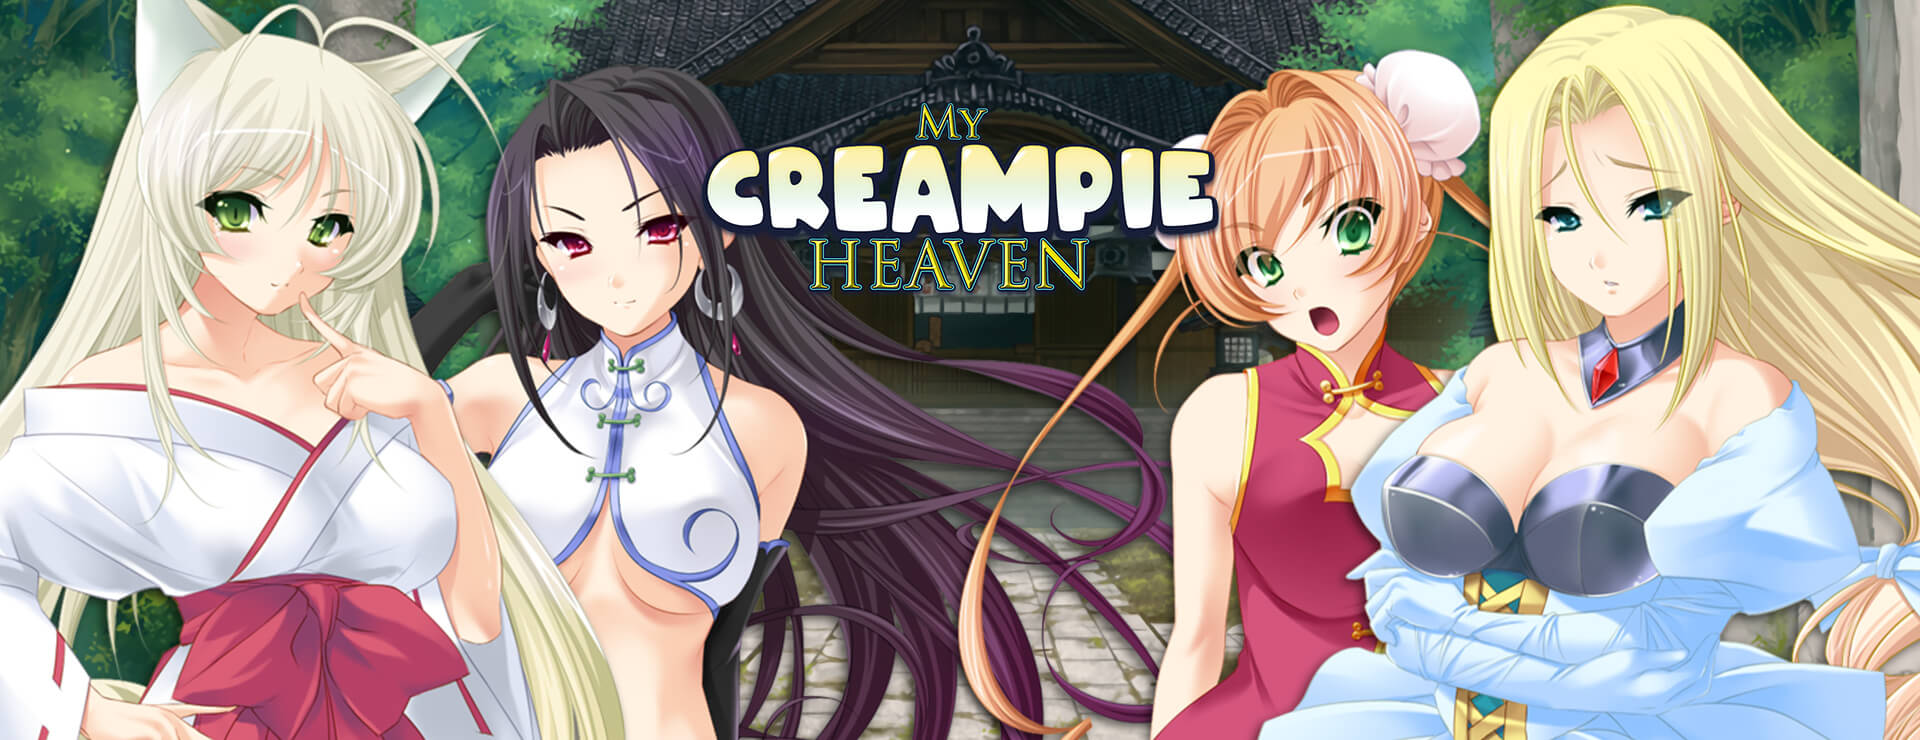 My Creampie Heaven - Novela Visual Juego